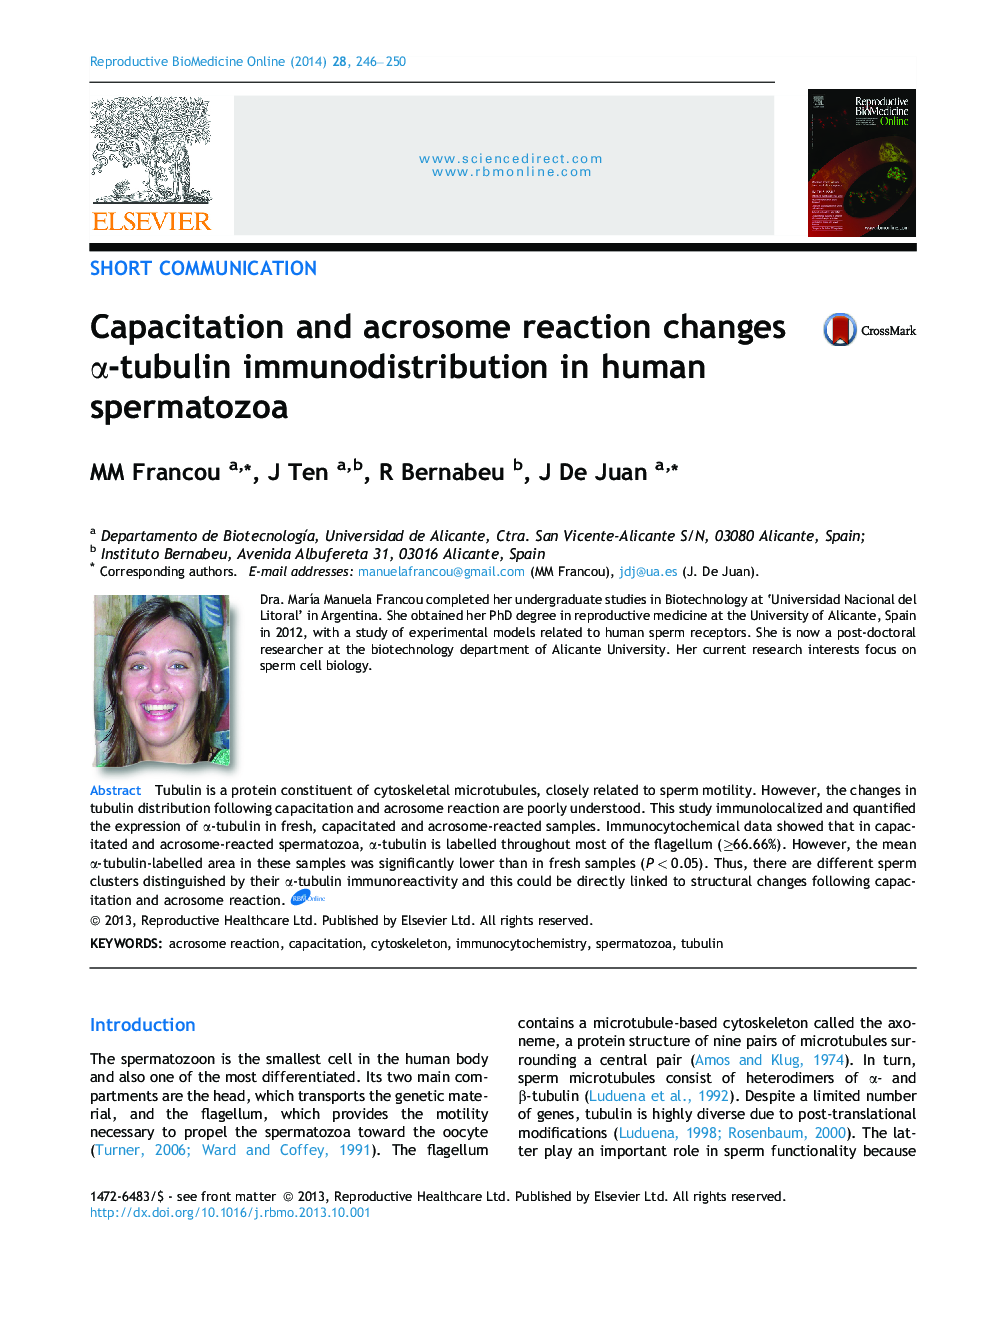 Capacitation and acrosome reaction changes α-tubulin immunodistribution in human spermatozoa 